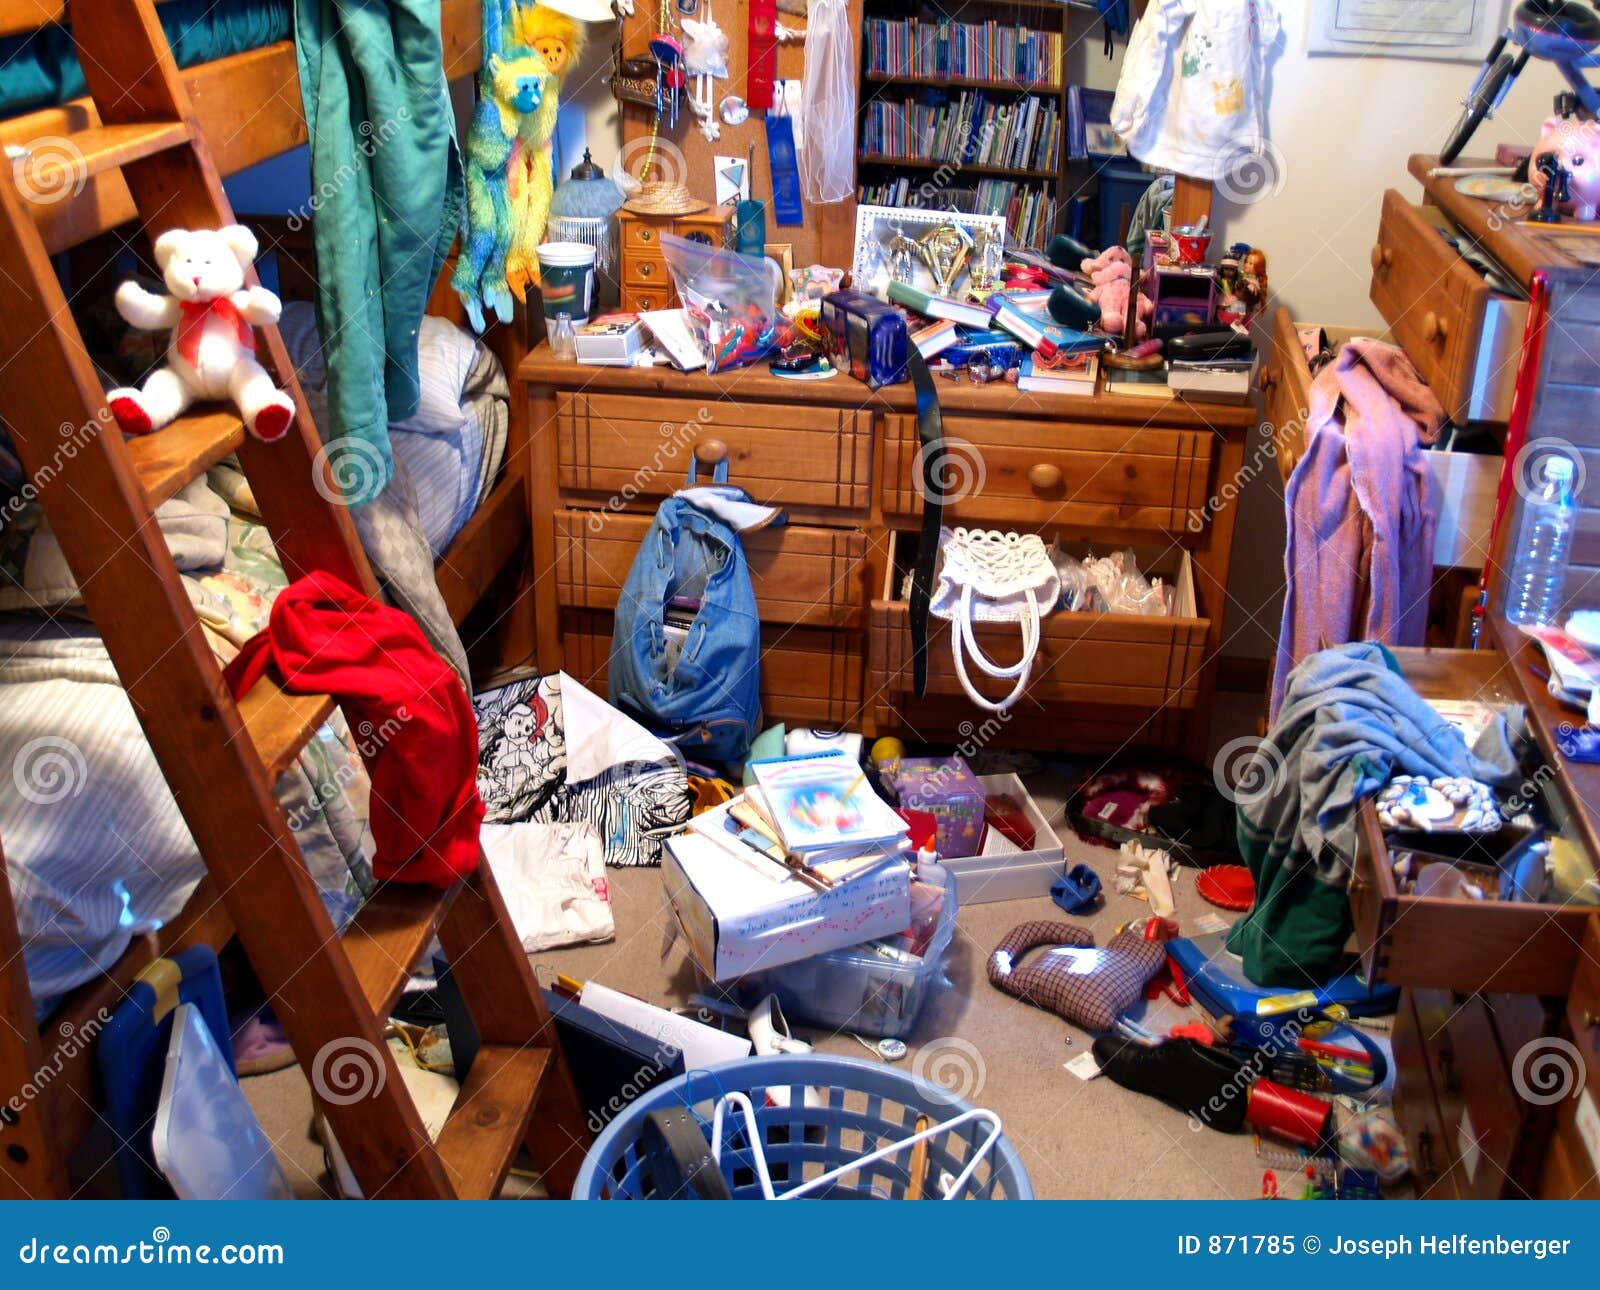 Messy Bedroom Royalty Free Stock Photo - Image: 871785
